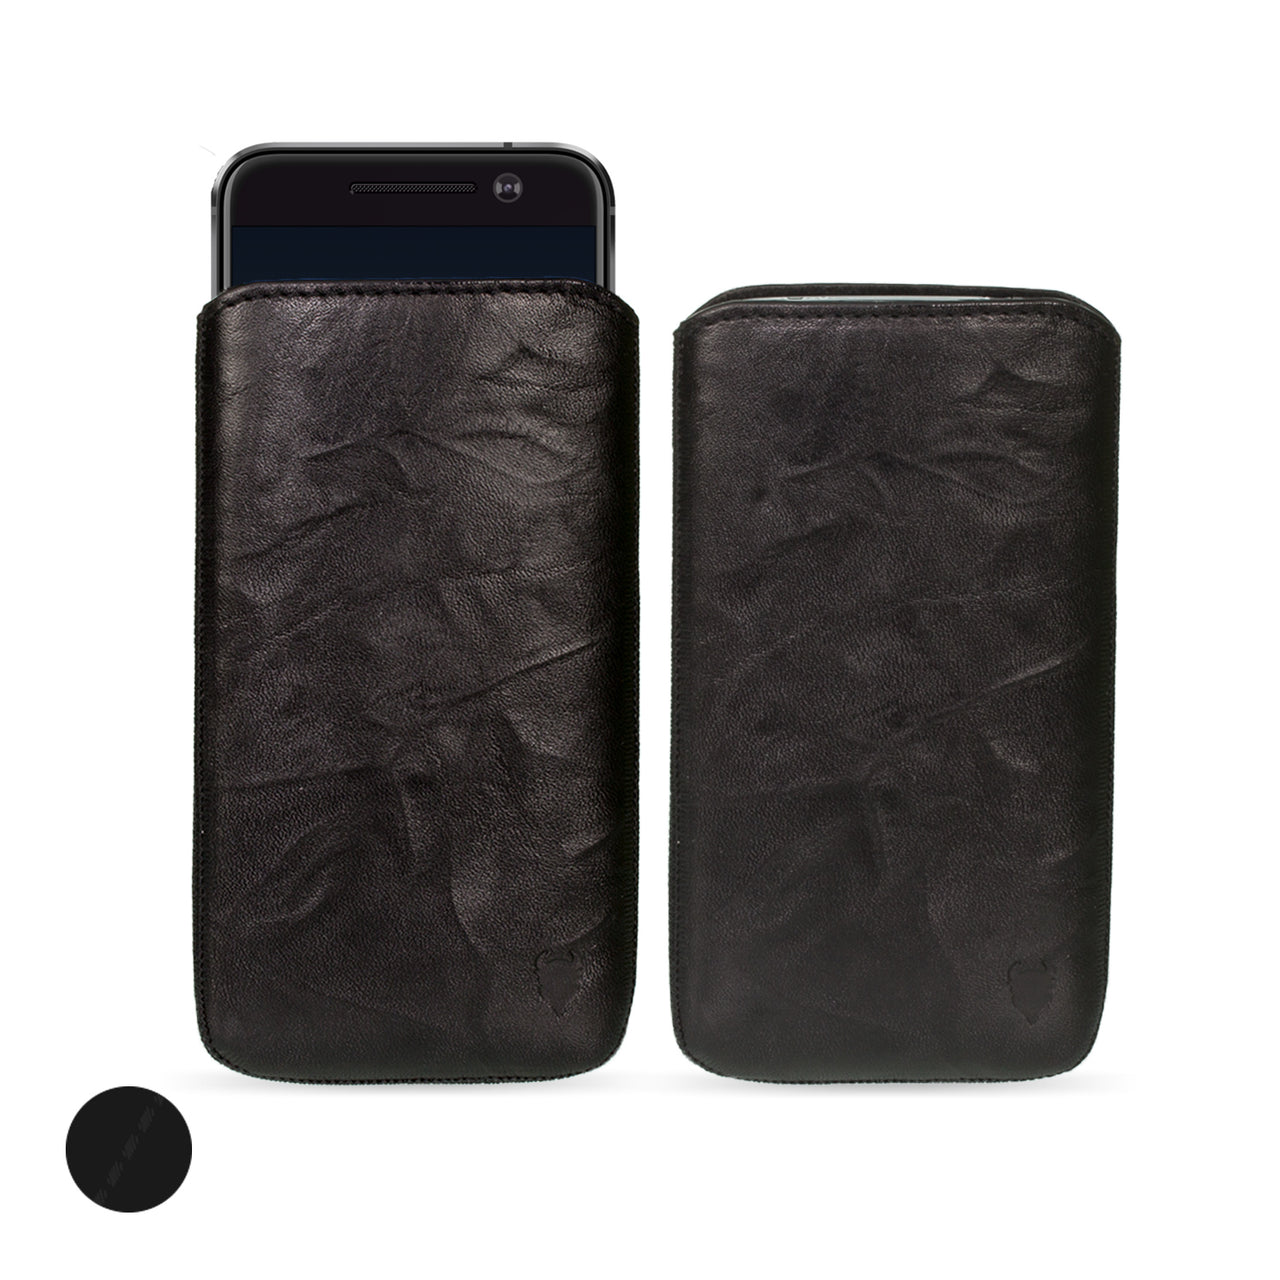 Samsung Galaxy J5 (2017) Genuine Leather Pouch Sleeve Case | Artisanpouch